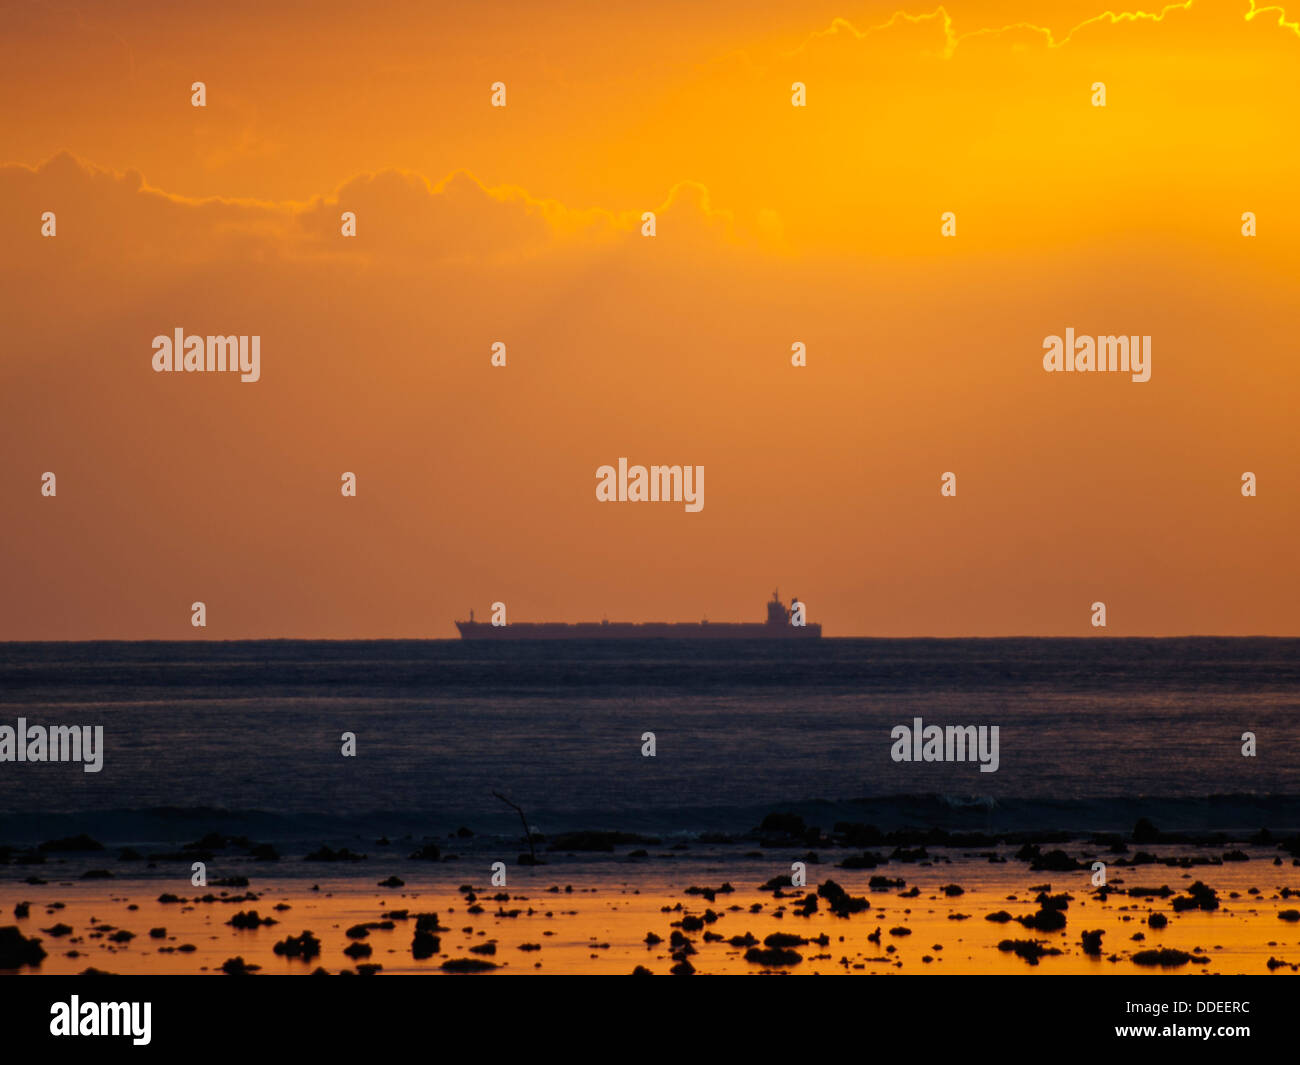 Carguero silueta en la línea del horizonte con luz naranja atardecer Foto de stock